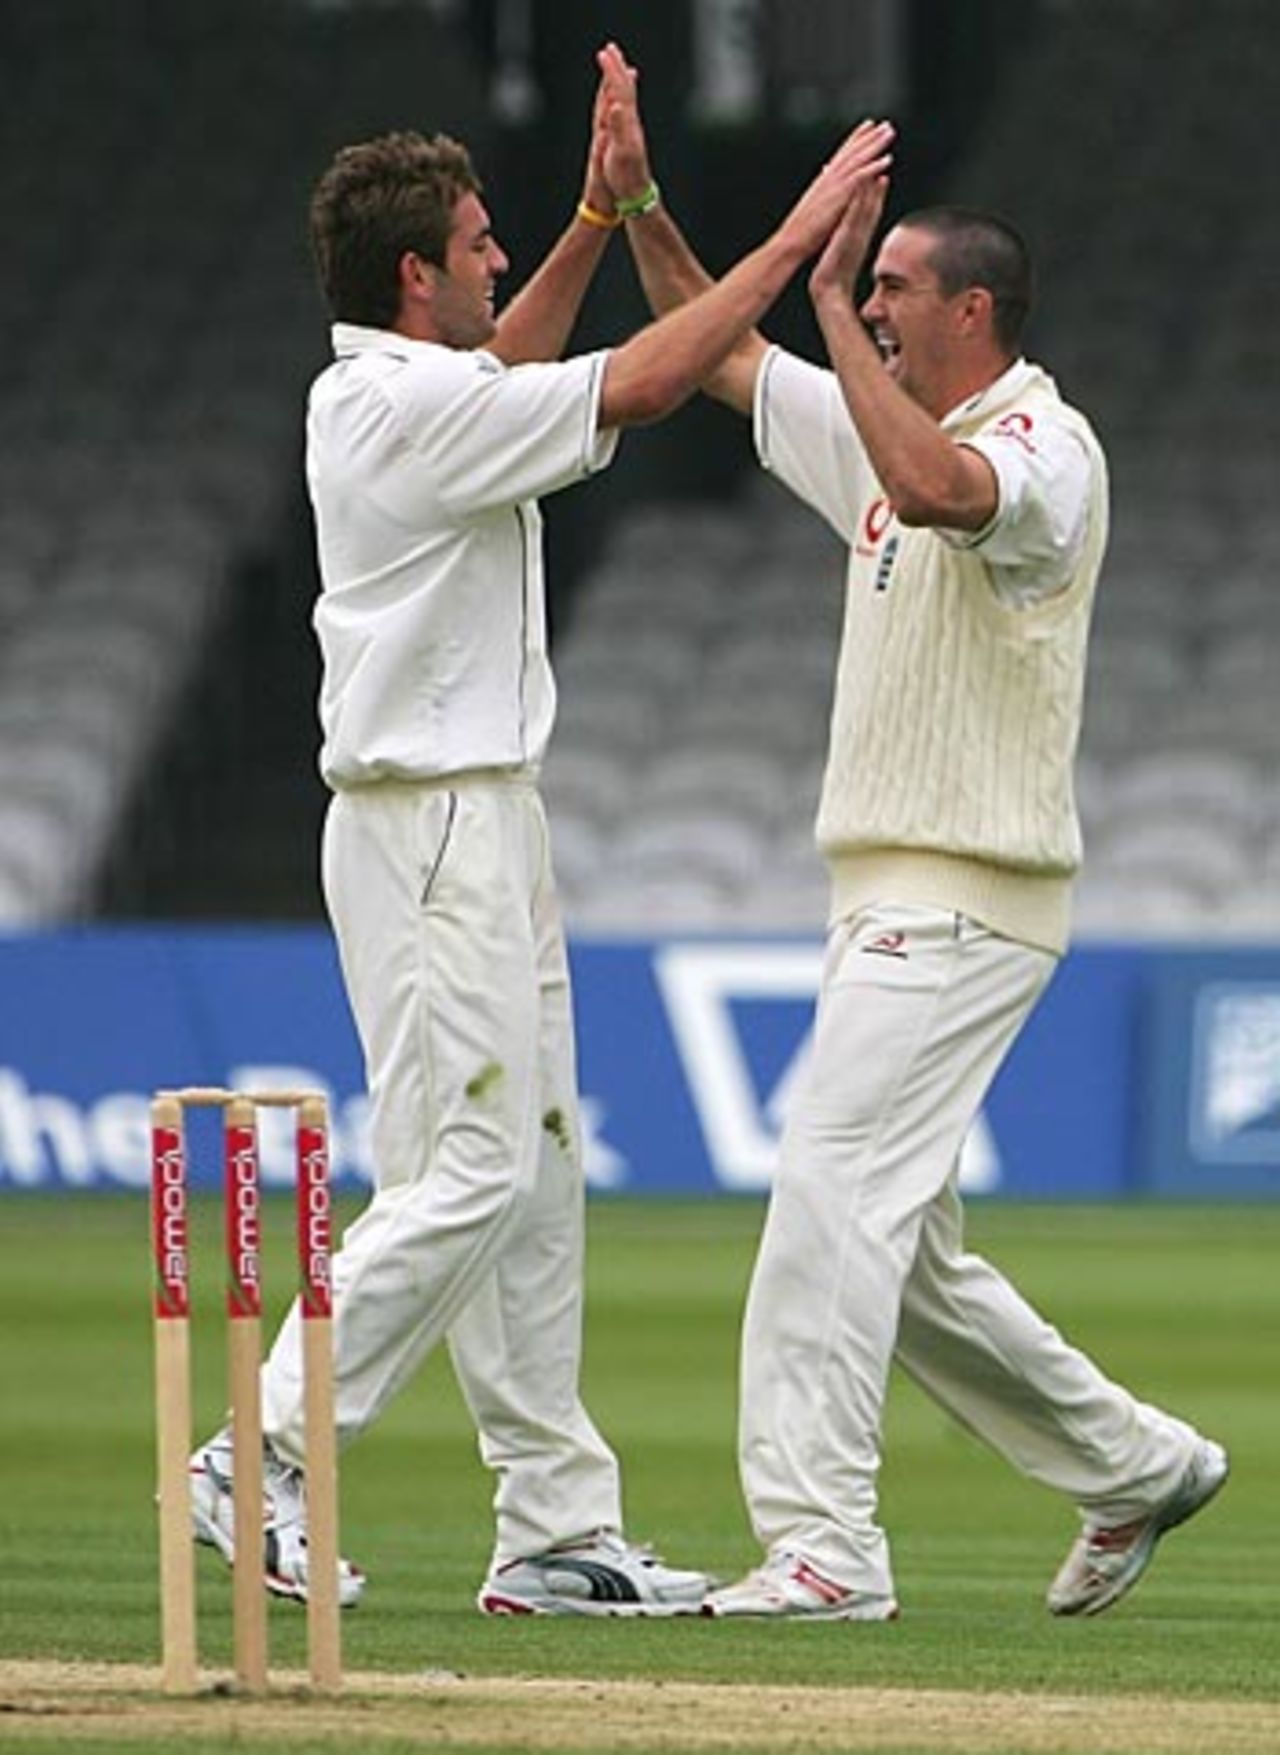 Kevin Pietersen congratulates Liam Plunkett on dismissing Tillakaratne Dilshan, England v Sri Lanka, 1st Test, Lord's, May 15, 2006